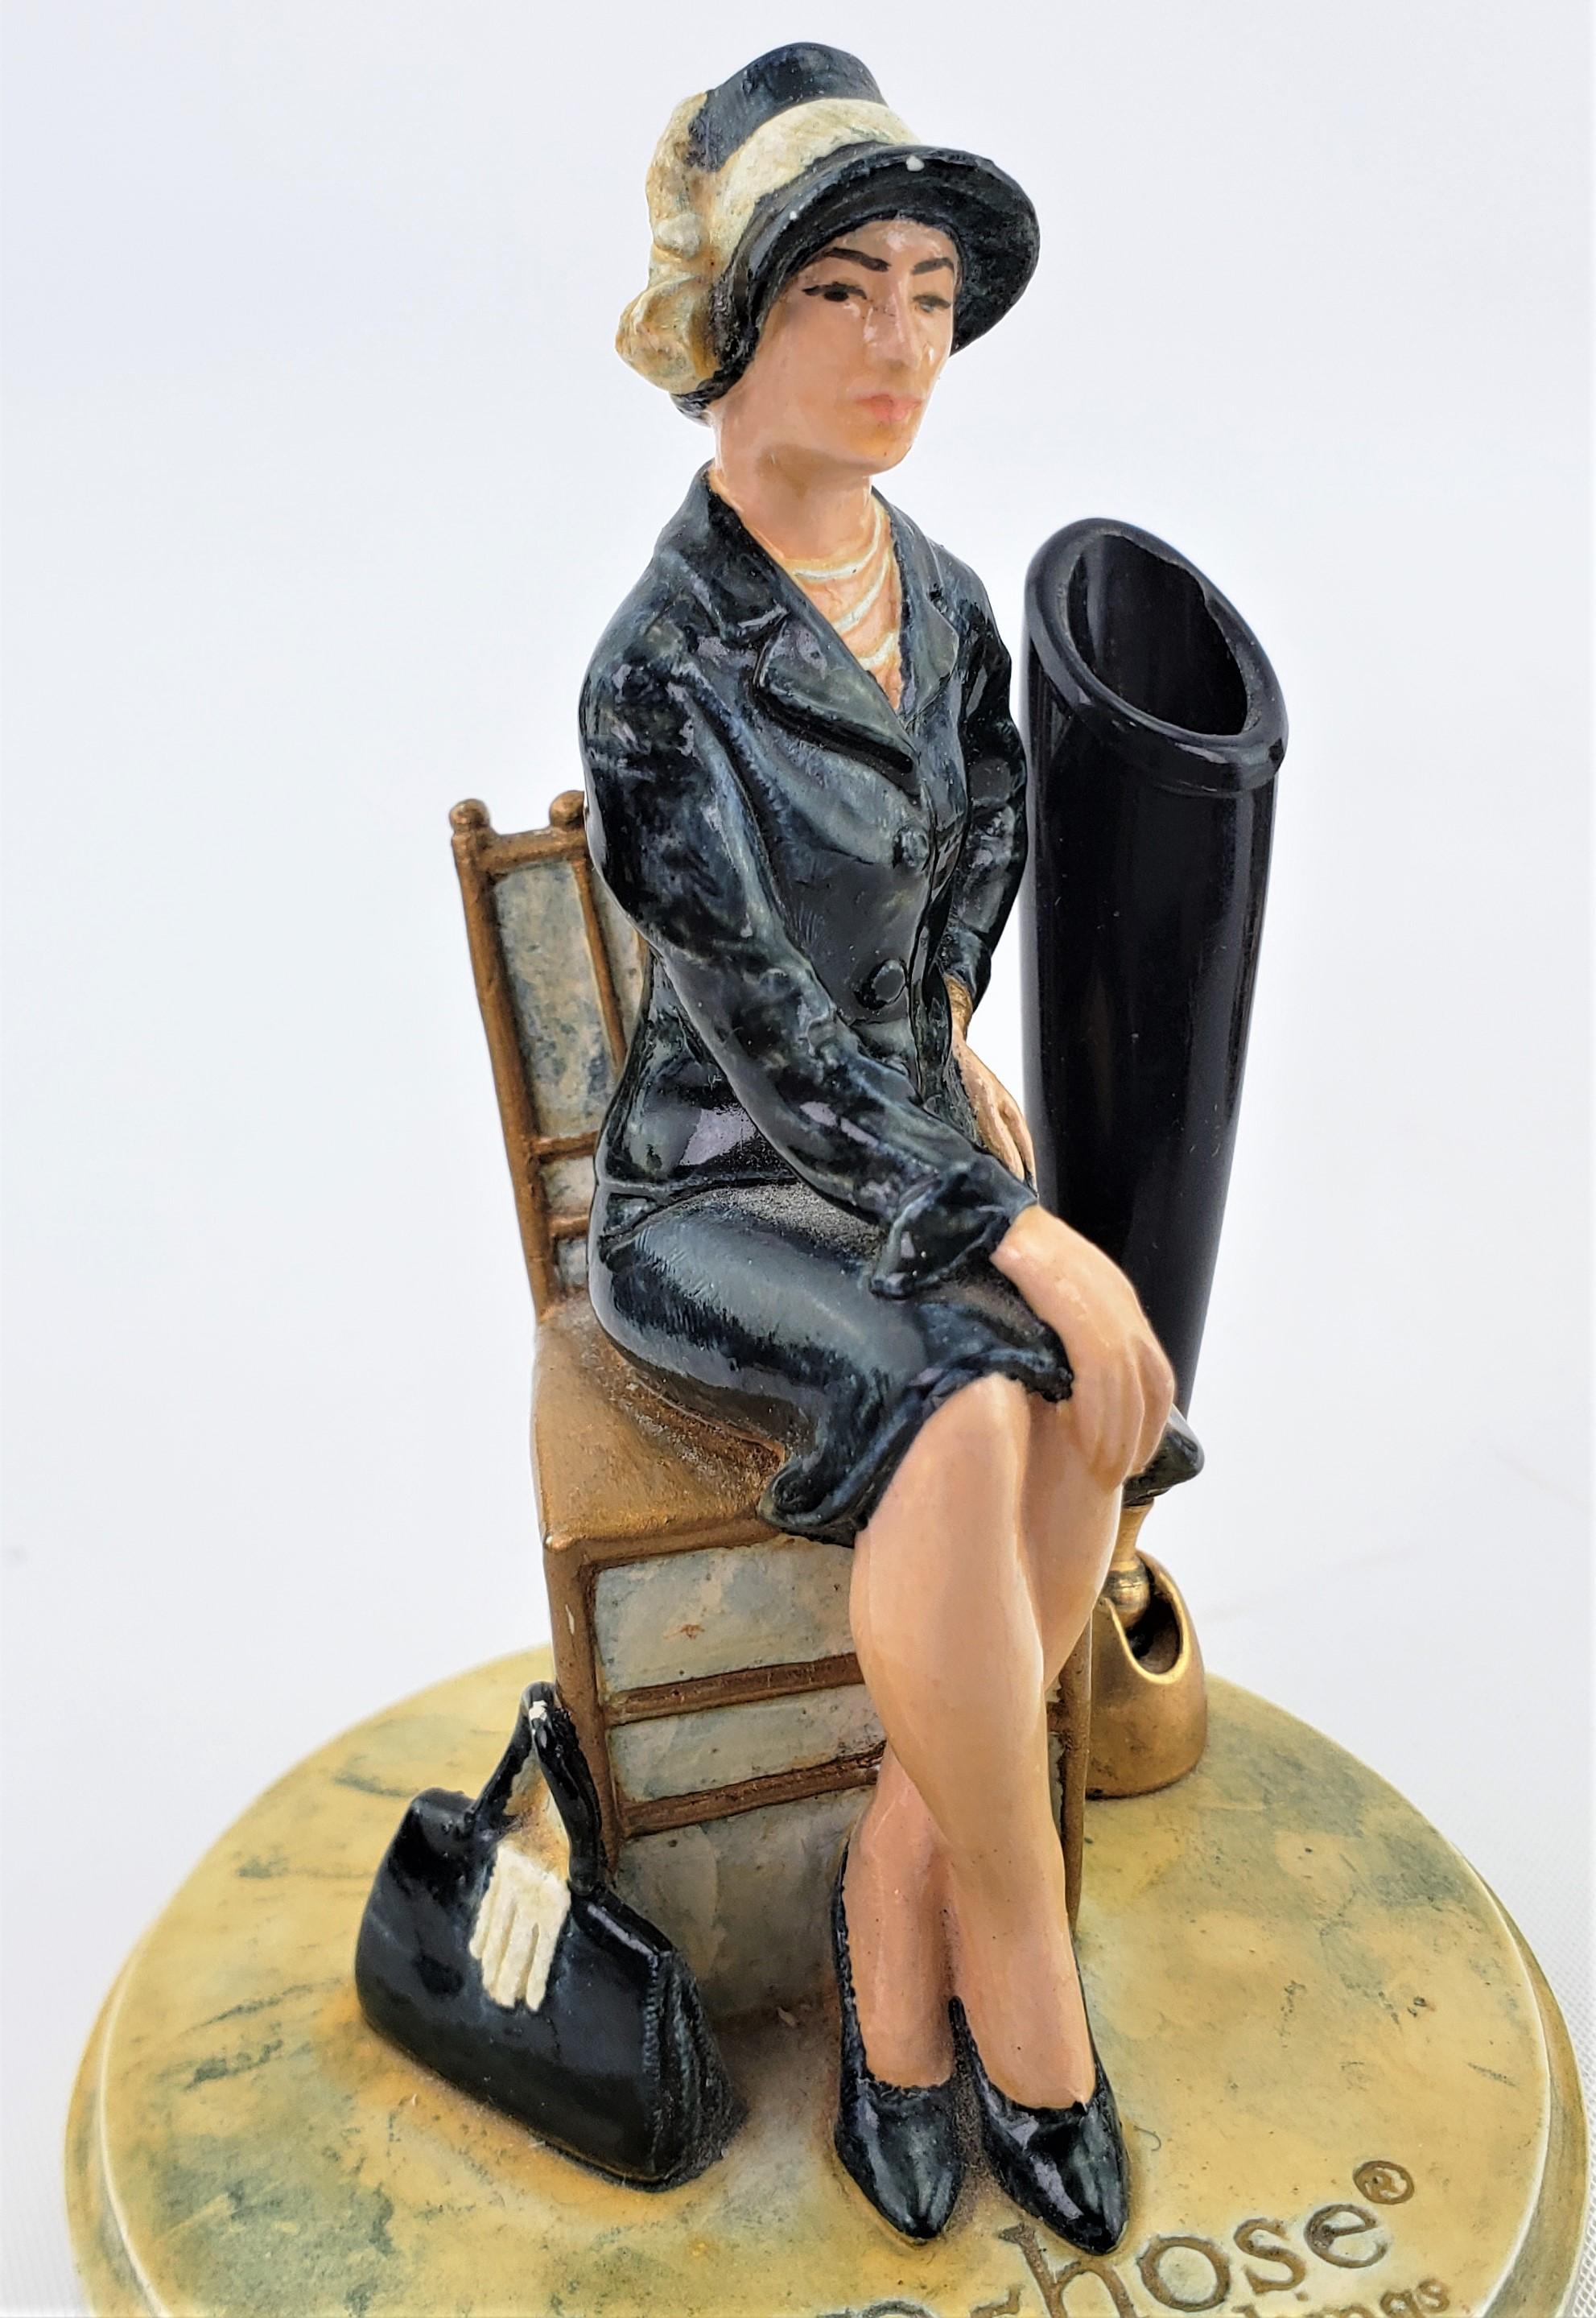 P.W. Baston Supp-Hose Woman's Stockings Advertising Pen Holder Desk Set For Sale 4